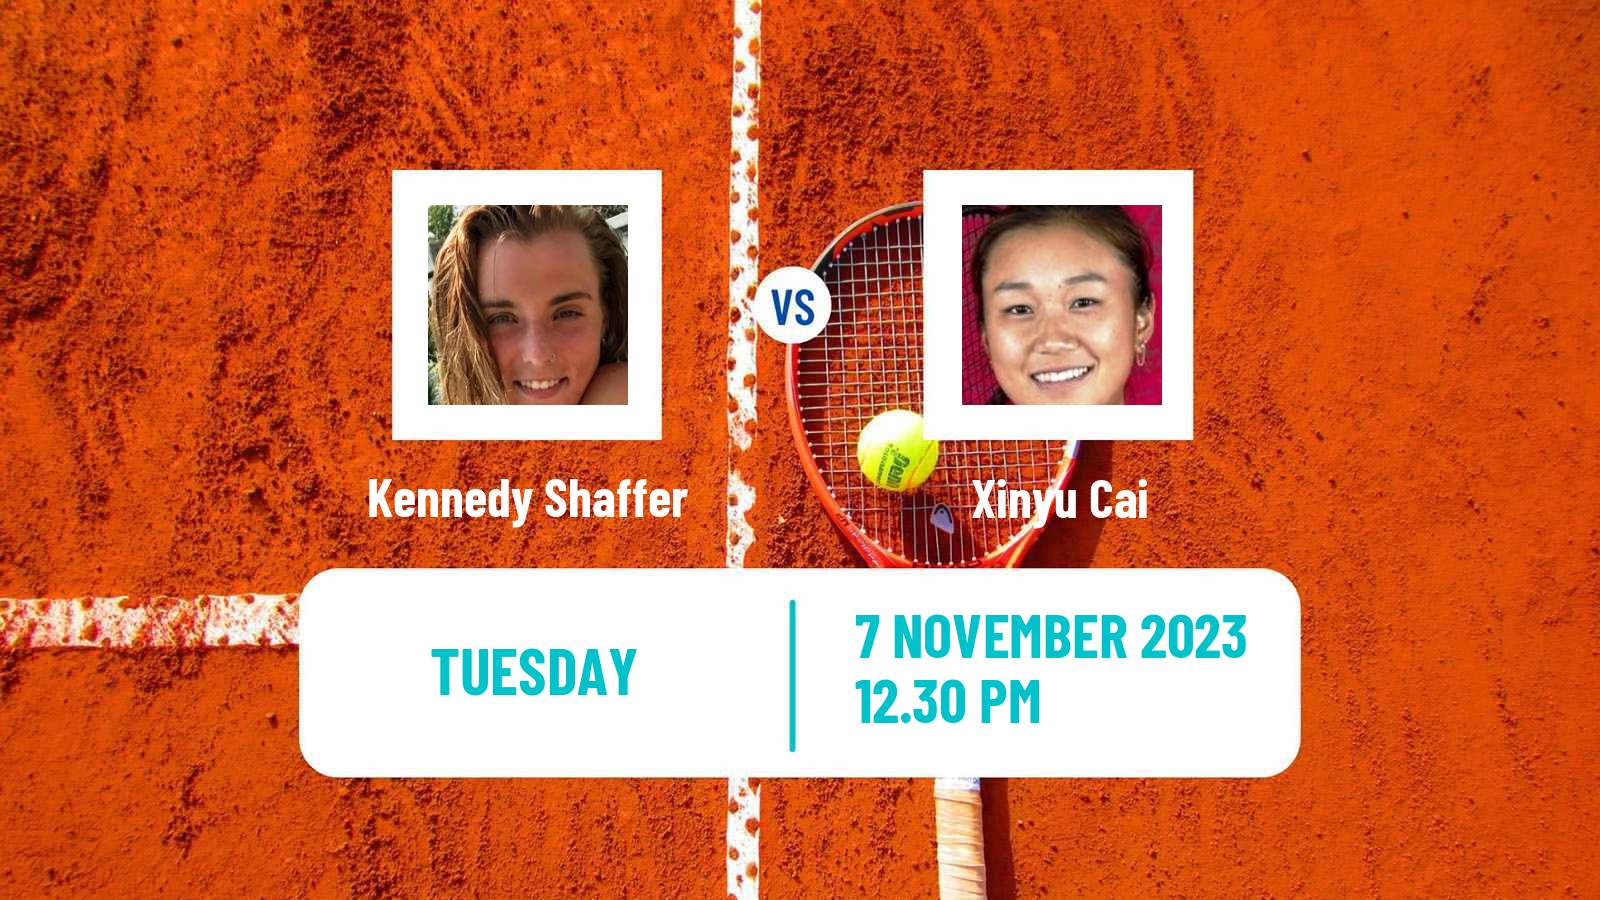 Tennis ITF W15 Champaign Il Women 2023 Kennedy Shaffer - Xinyu Cai